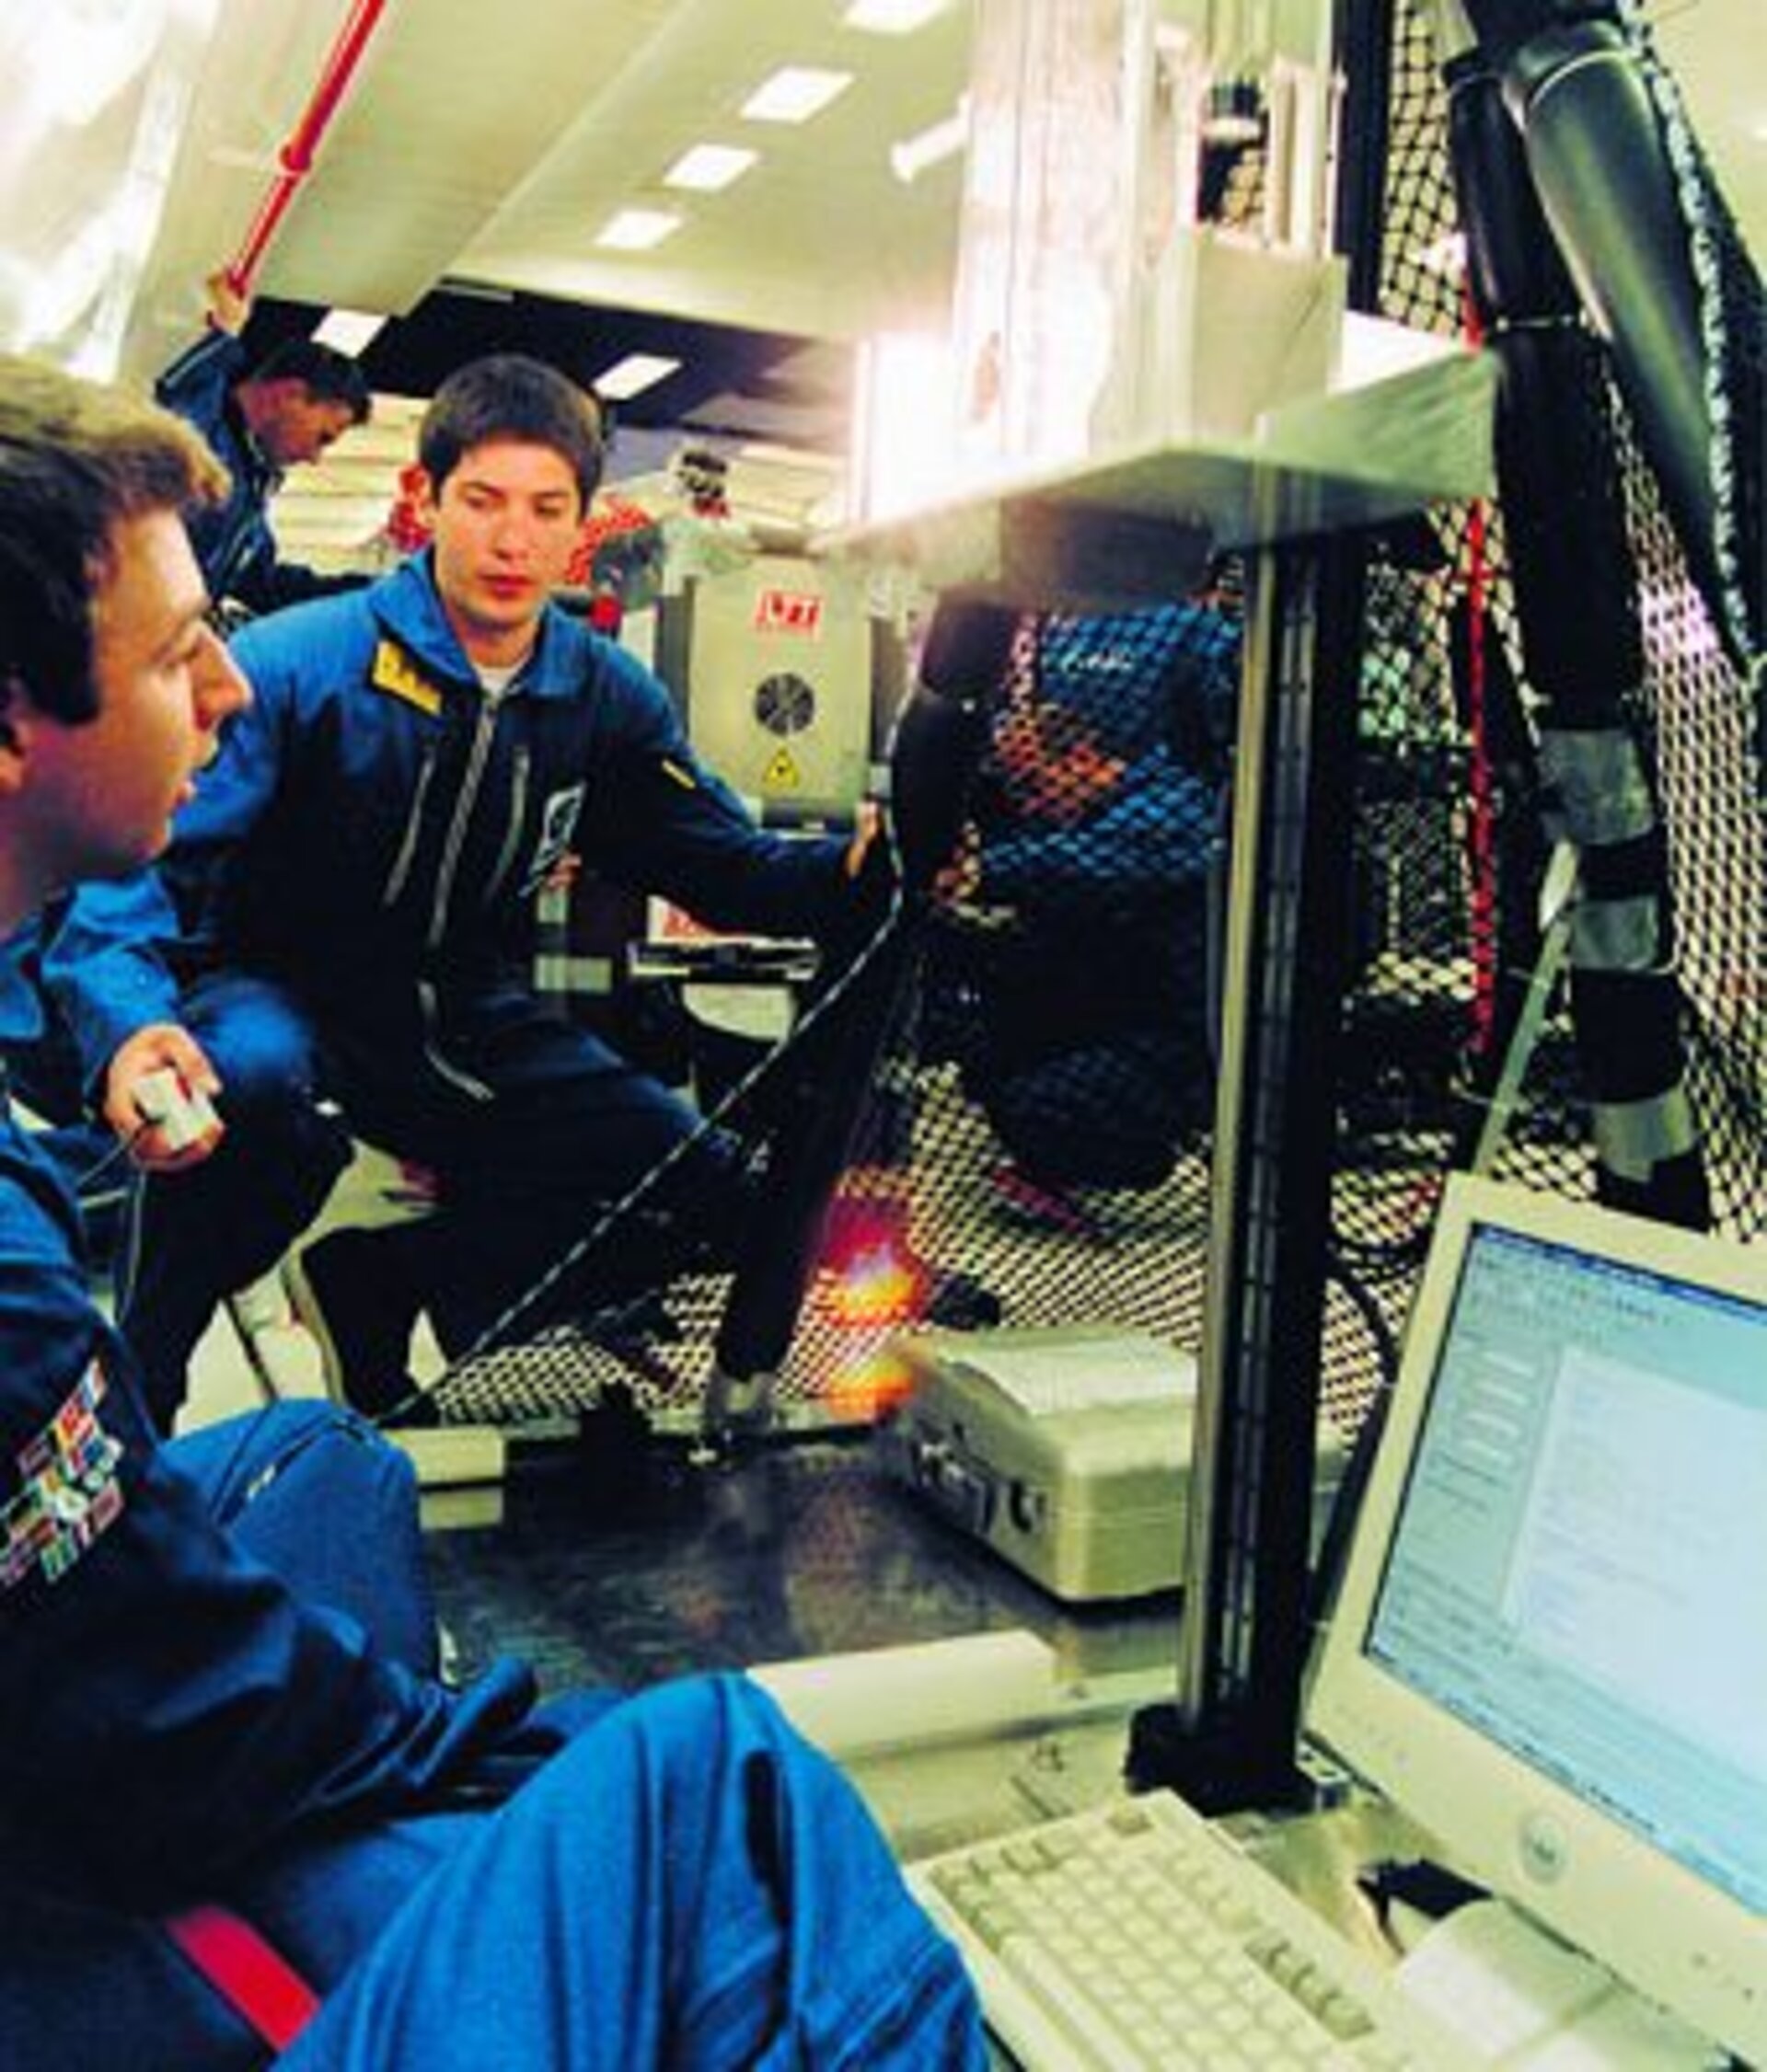 SUCCESS 1999 experiment during a parabolic flight